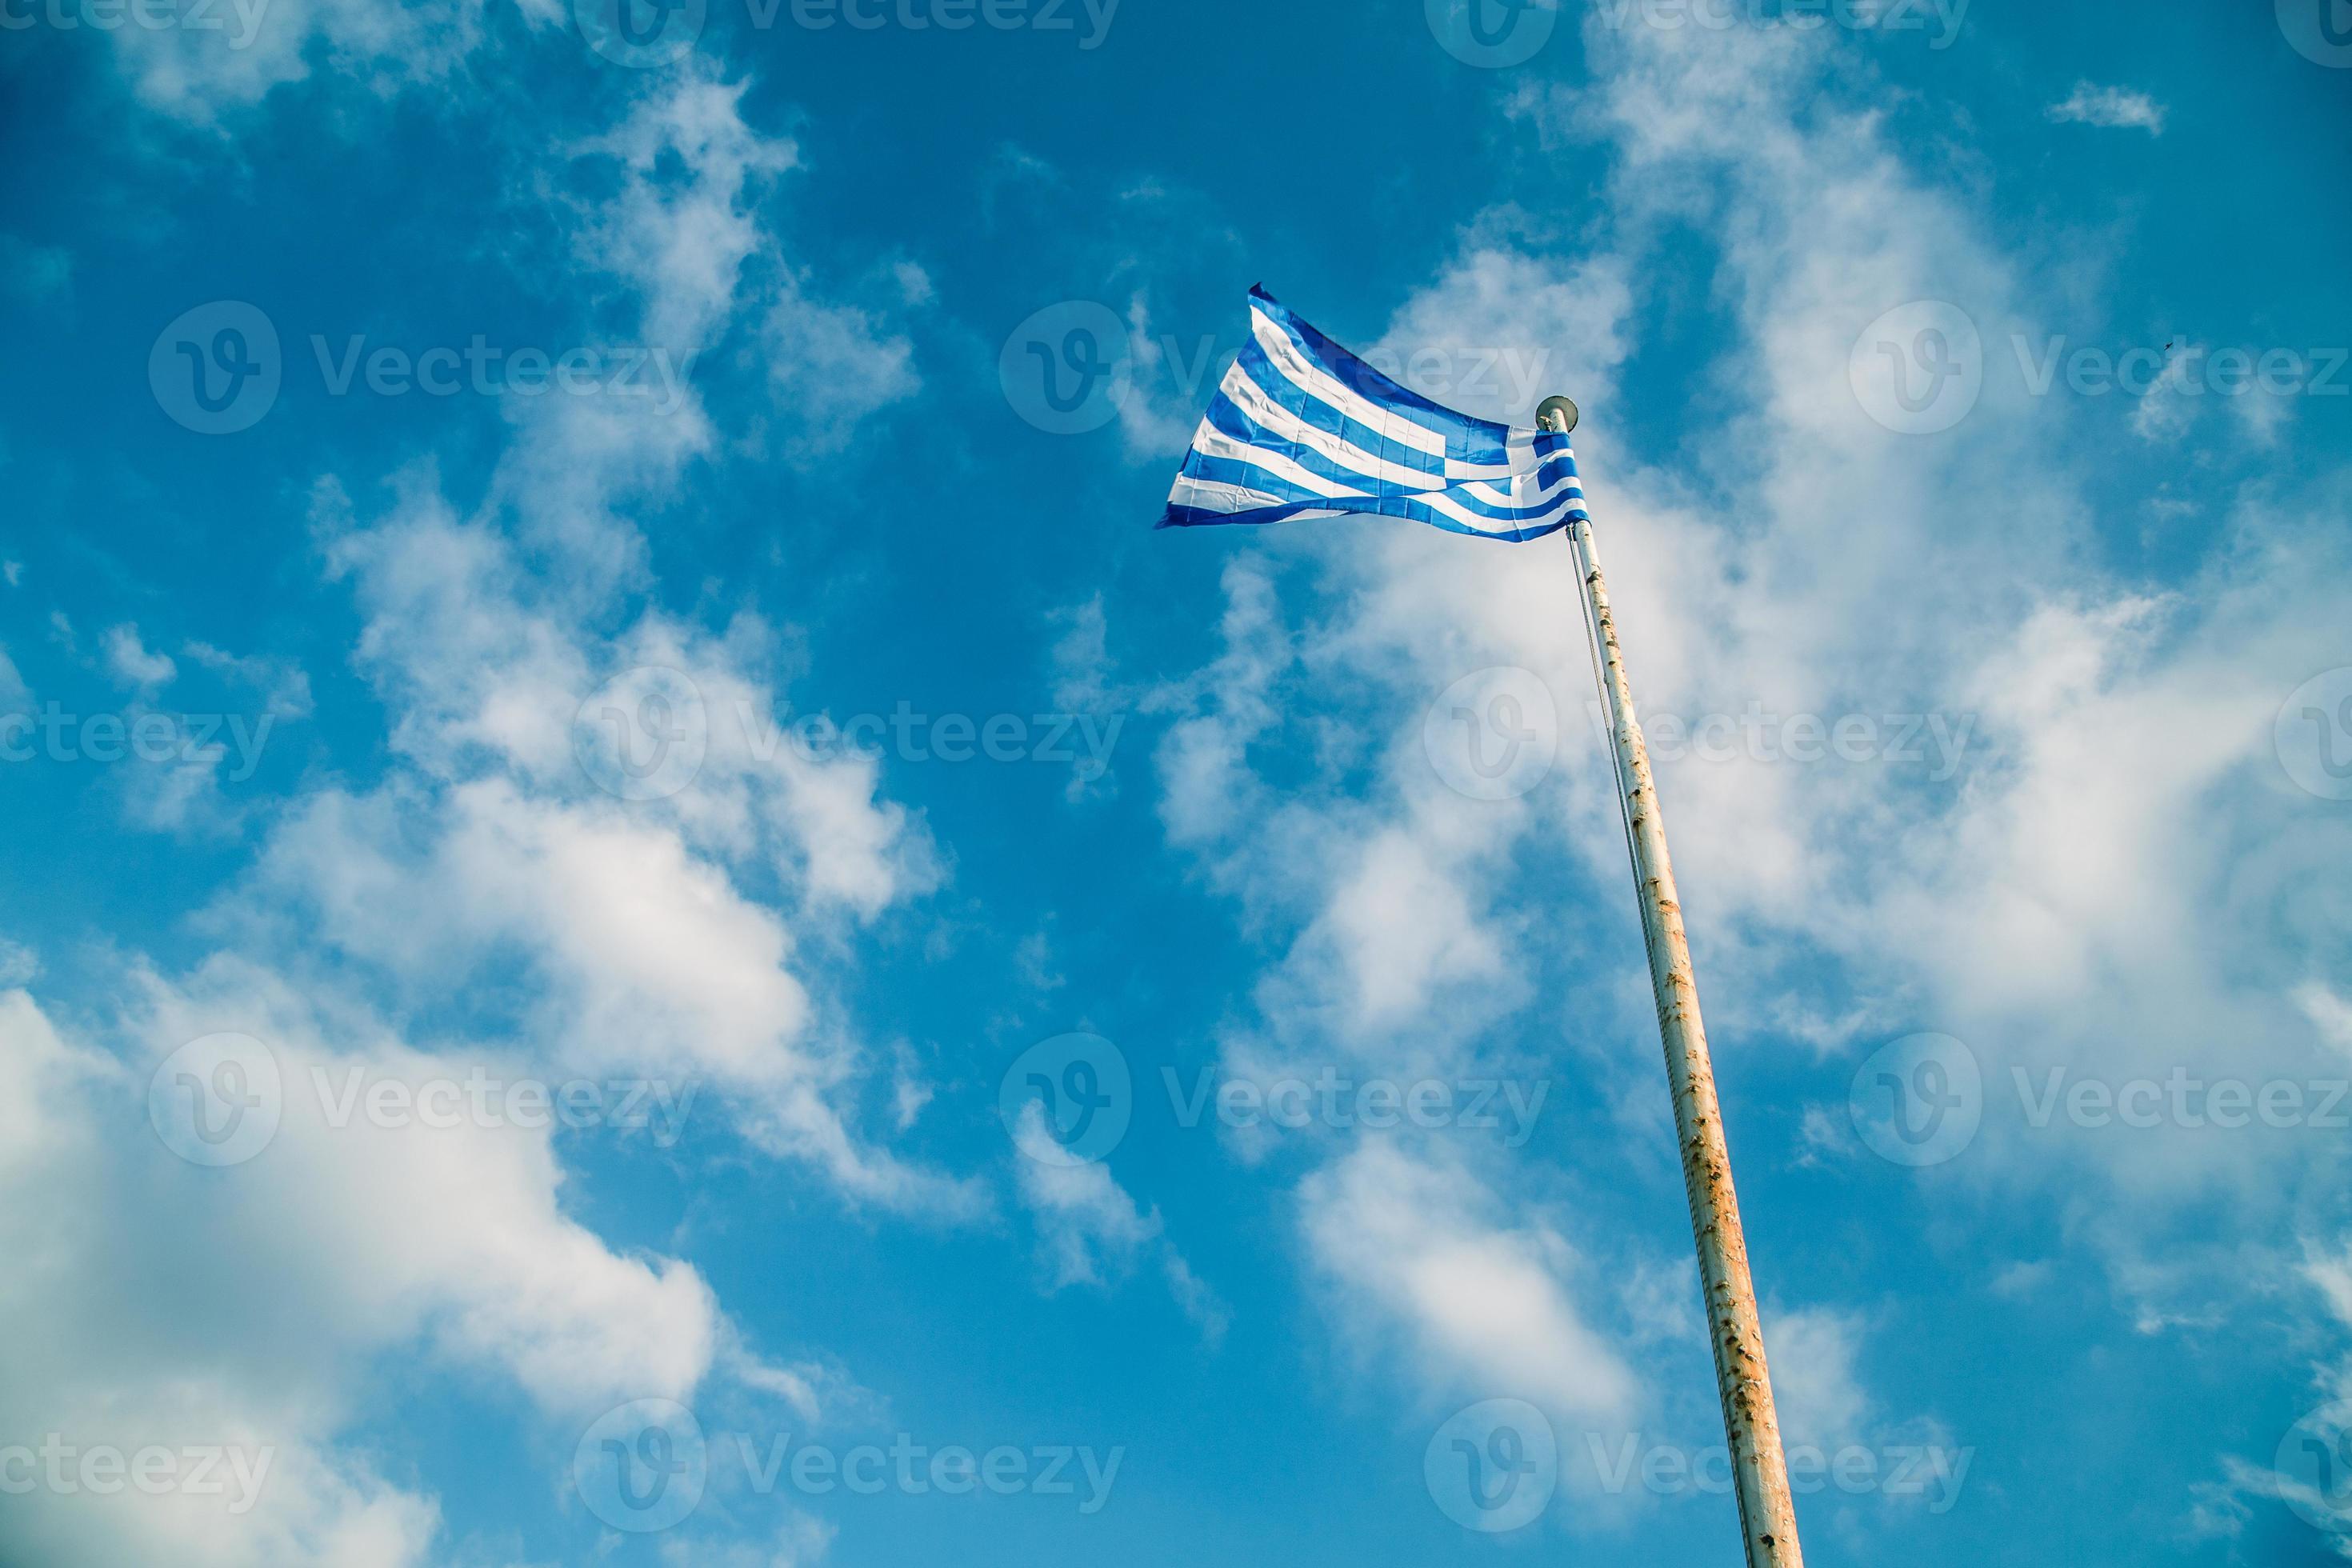 griekenland vlag op de vlaggenmast foto